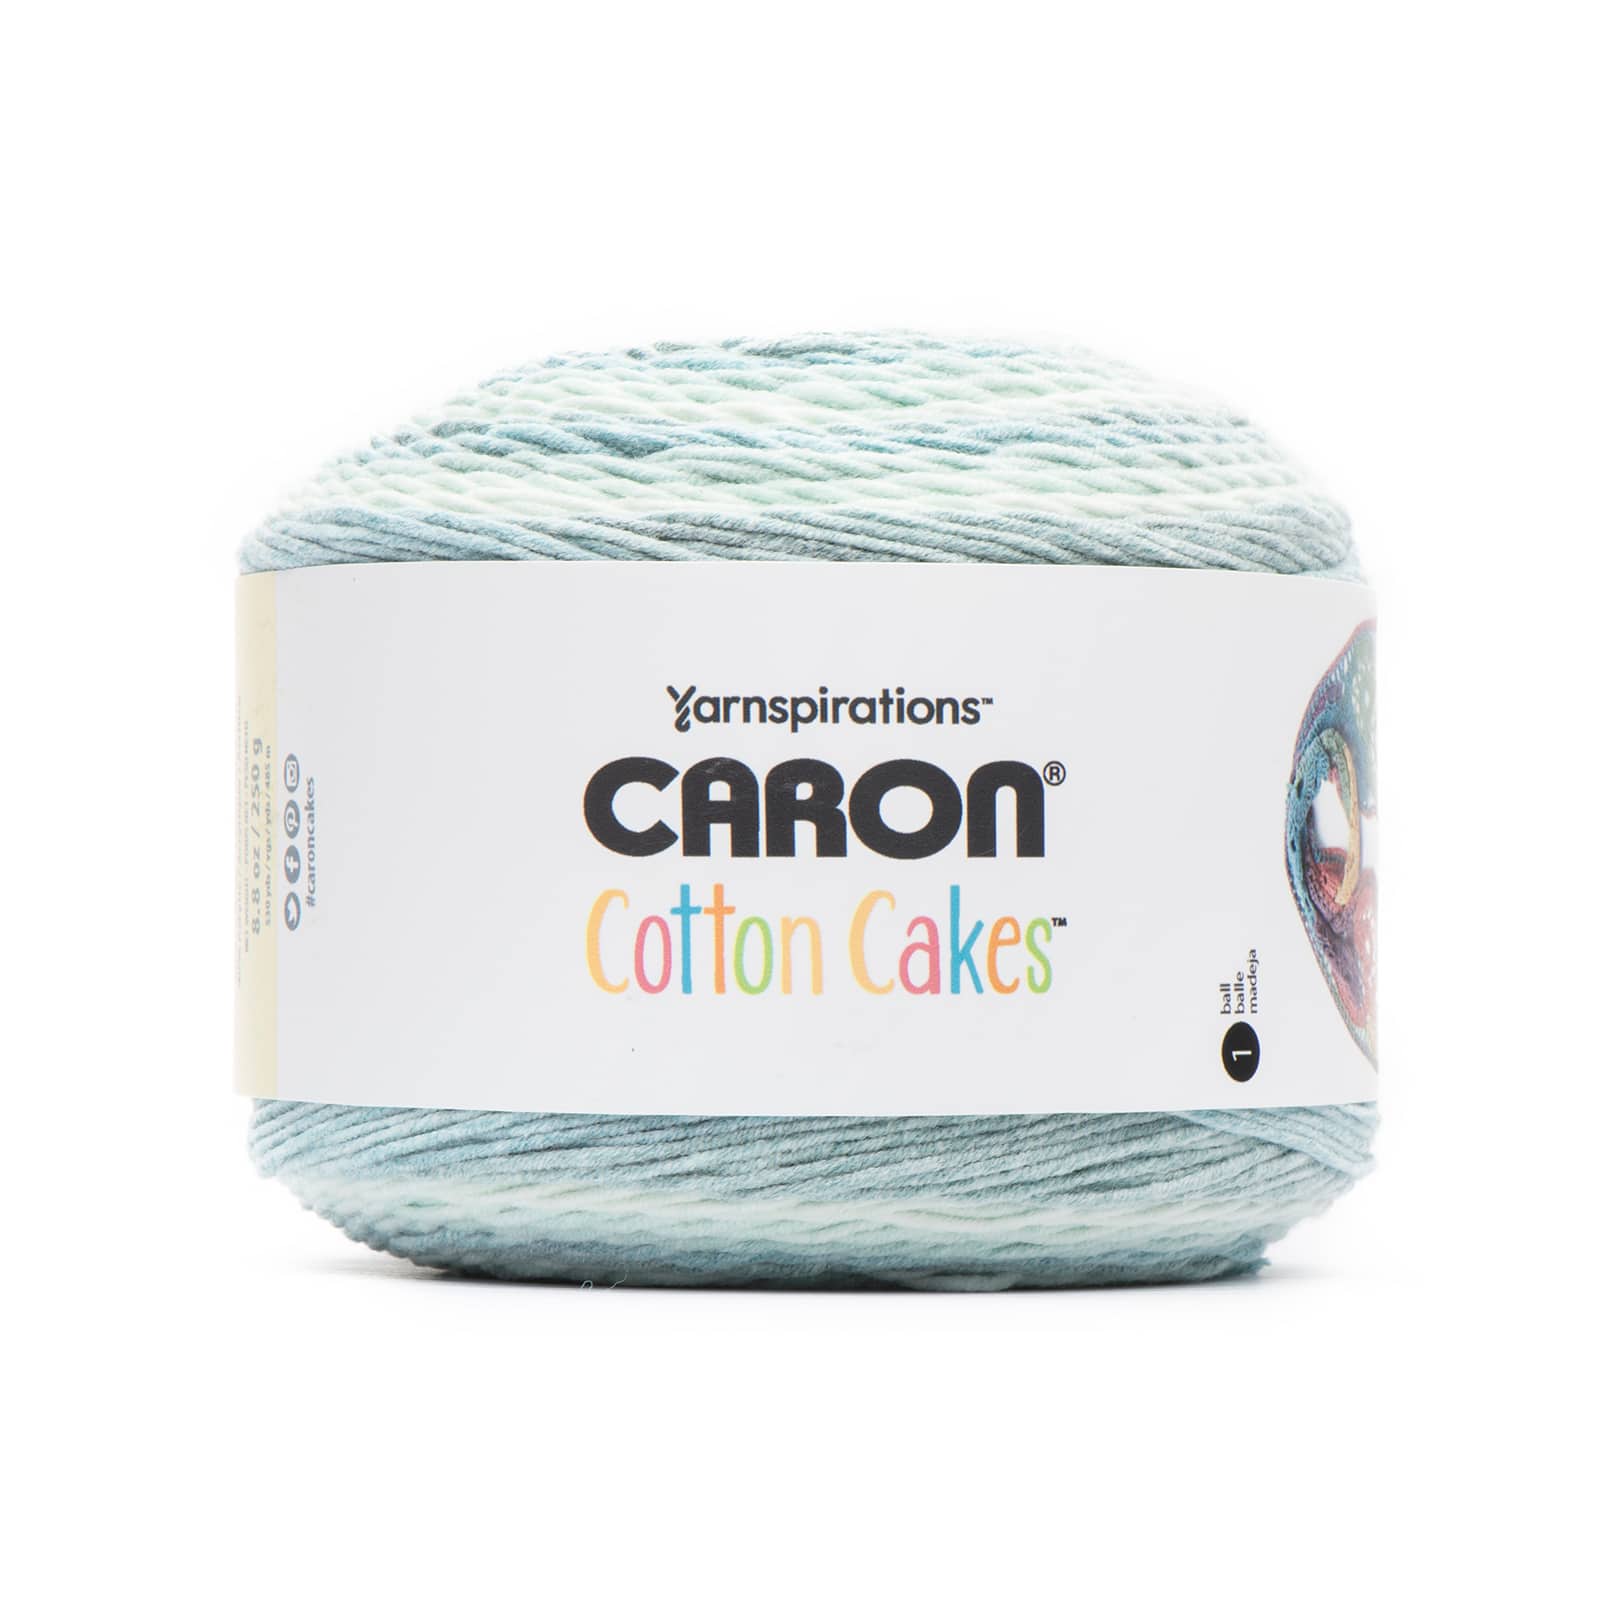 Yarn Review Caron Cotton Cakes